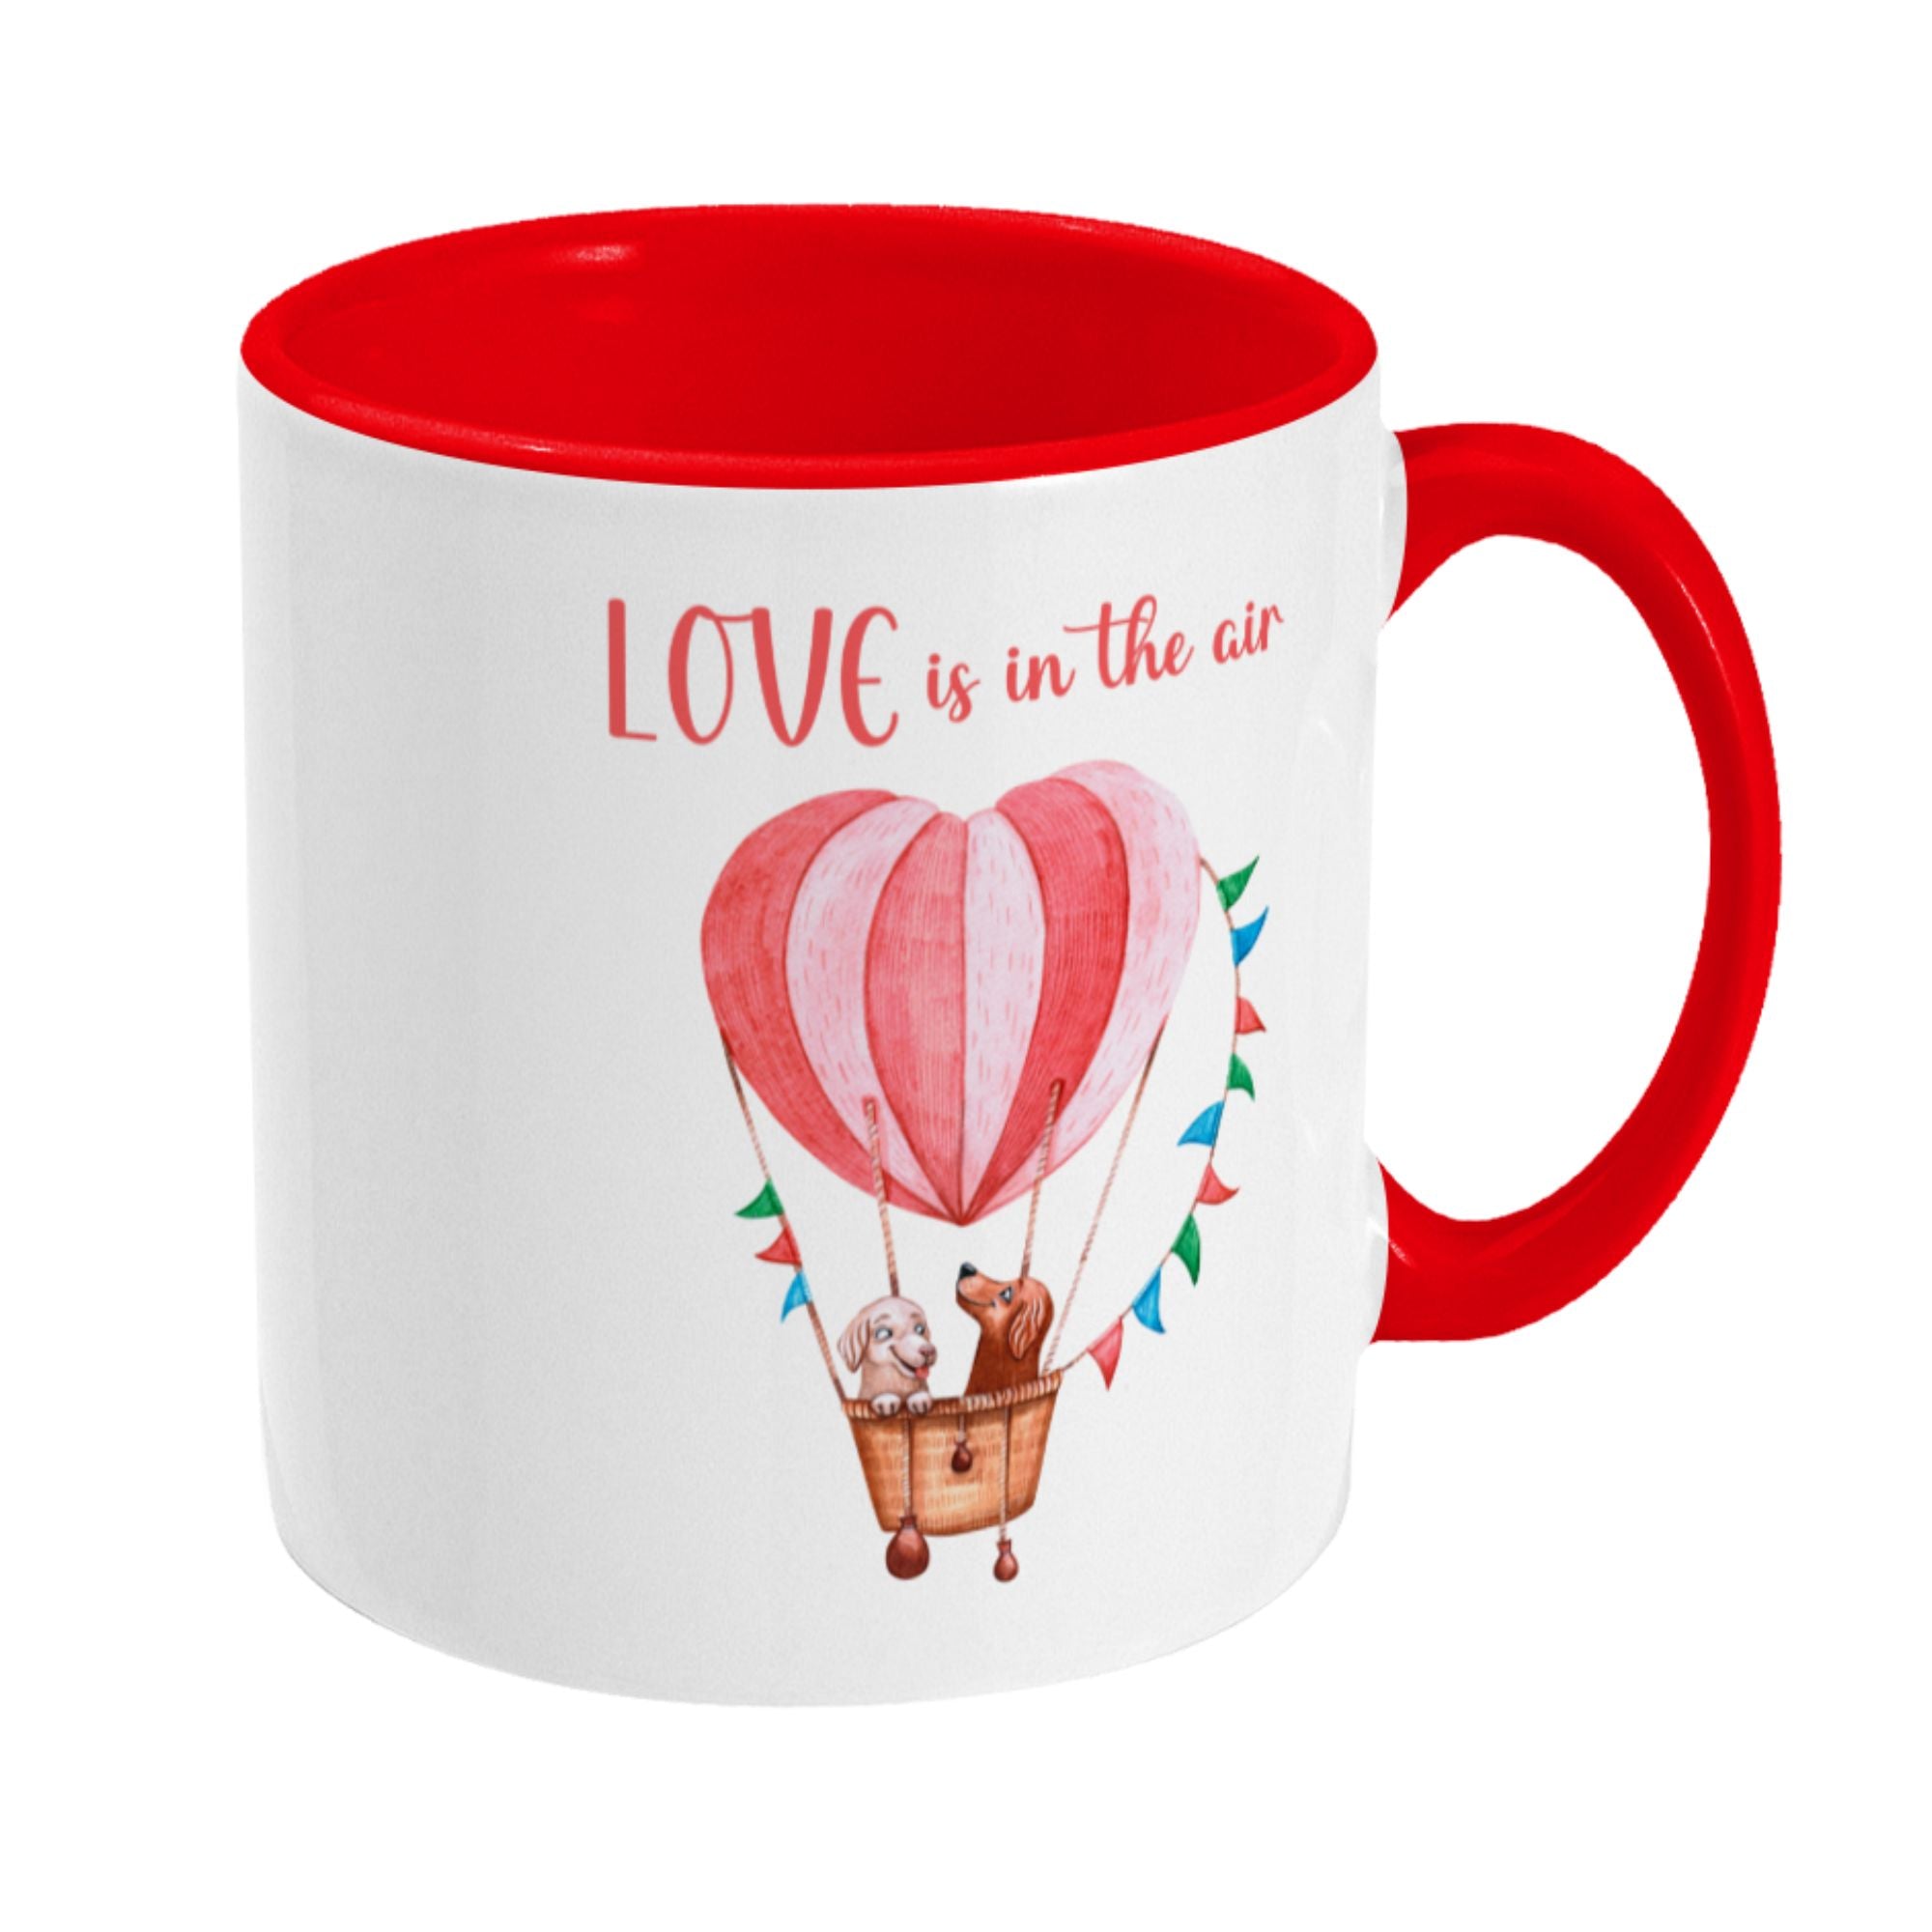 Love is in the air Mug, 11oz Ceramic Mug - Sweetie